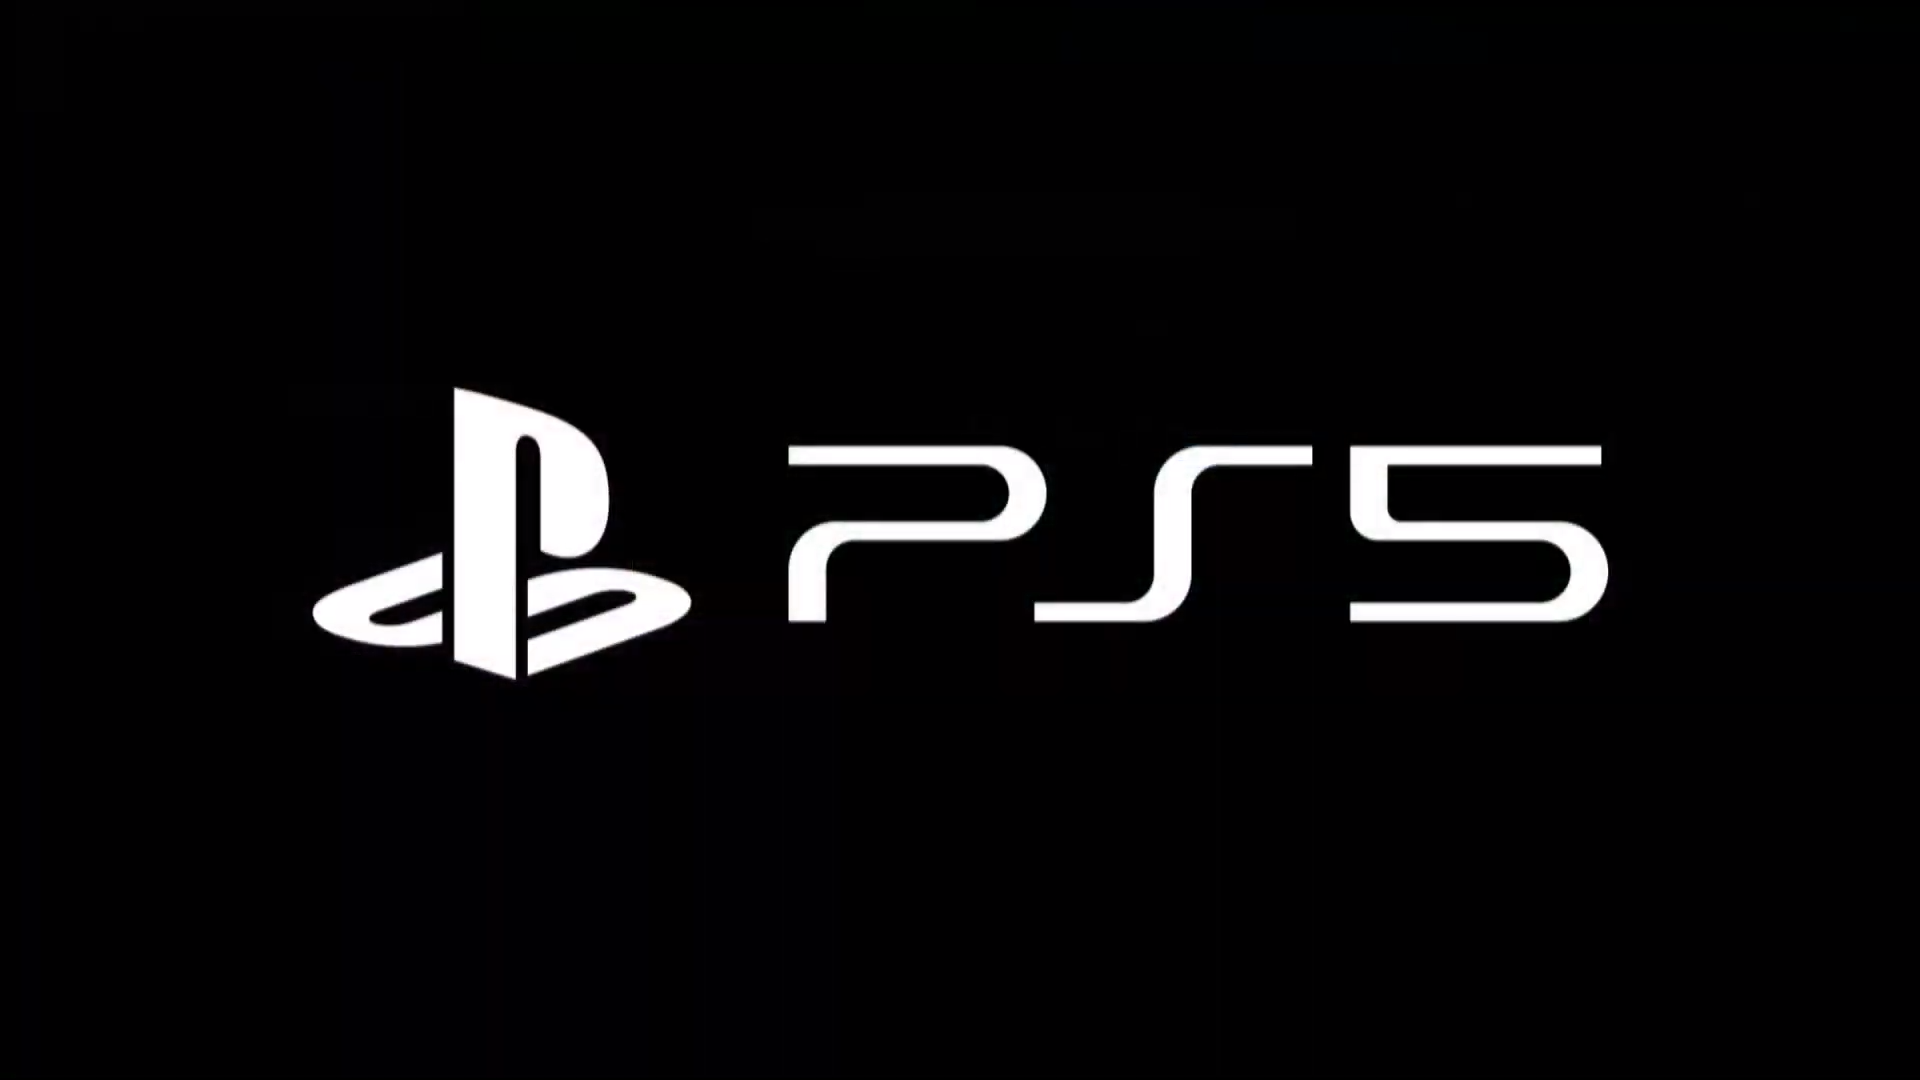 Ps5 logo прозрачные. Ps4 эмблема. Sony PLAYSTATION 5 логотип. PLAYSTATION надпись. Logo 5 4